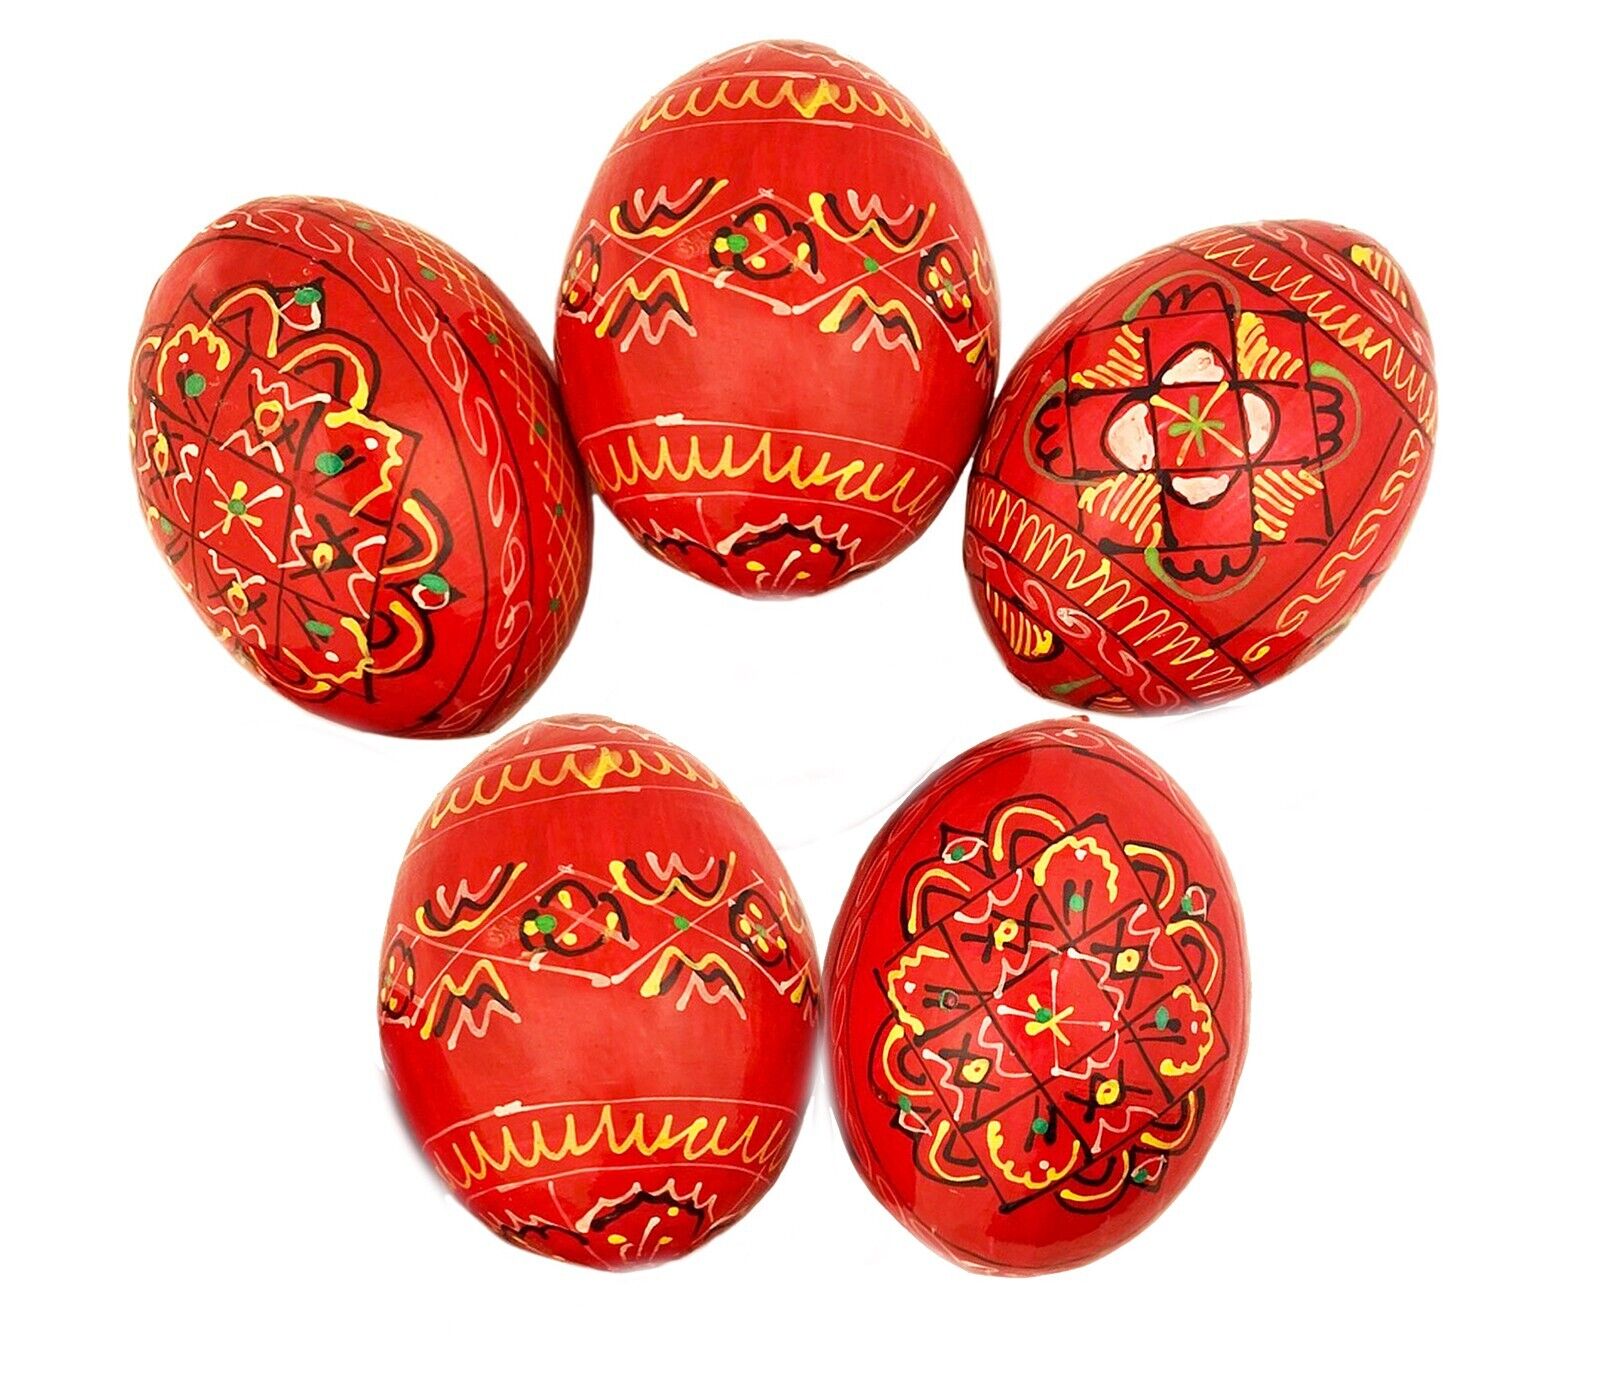 Pysanky Pisanki Hand Painted Ukrainian Wooden Easter Eggs - Pack of 5, Red - 2 5